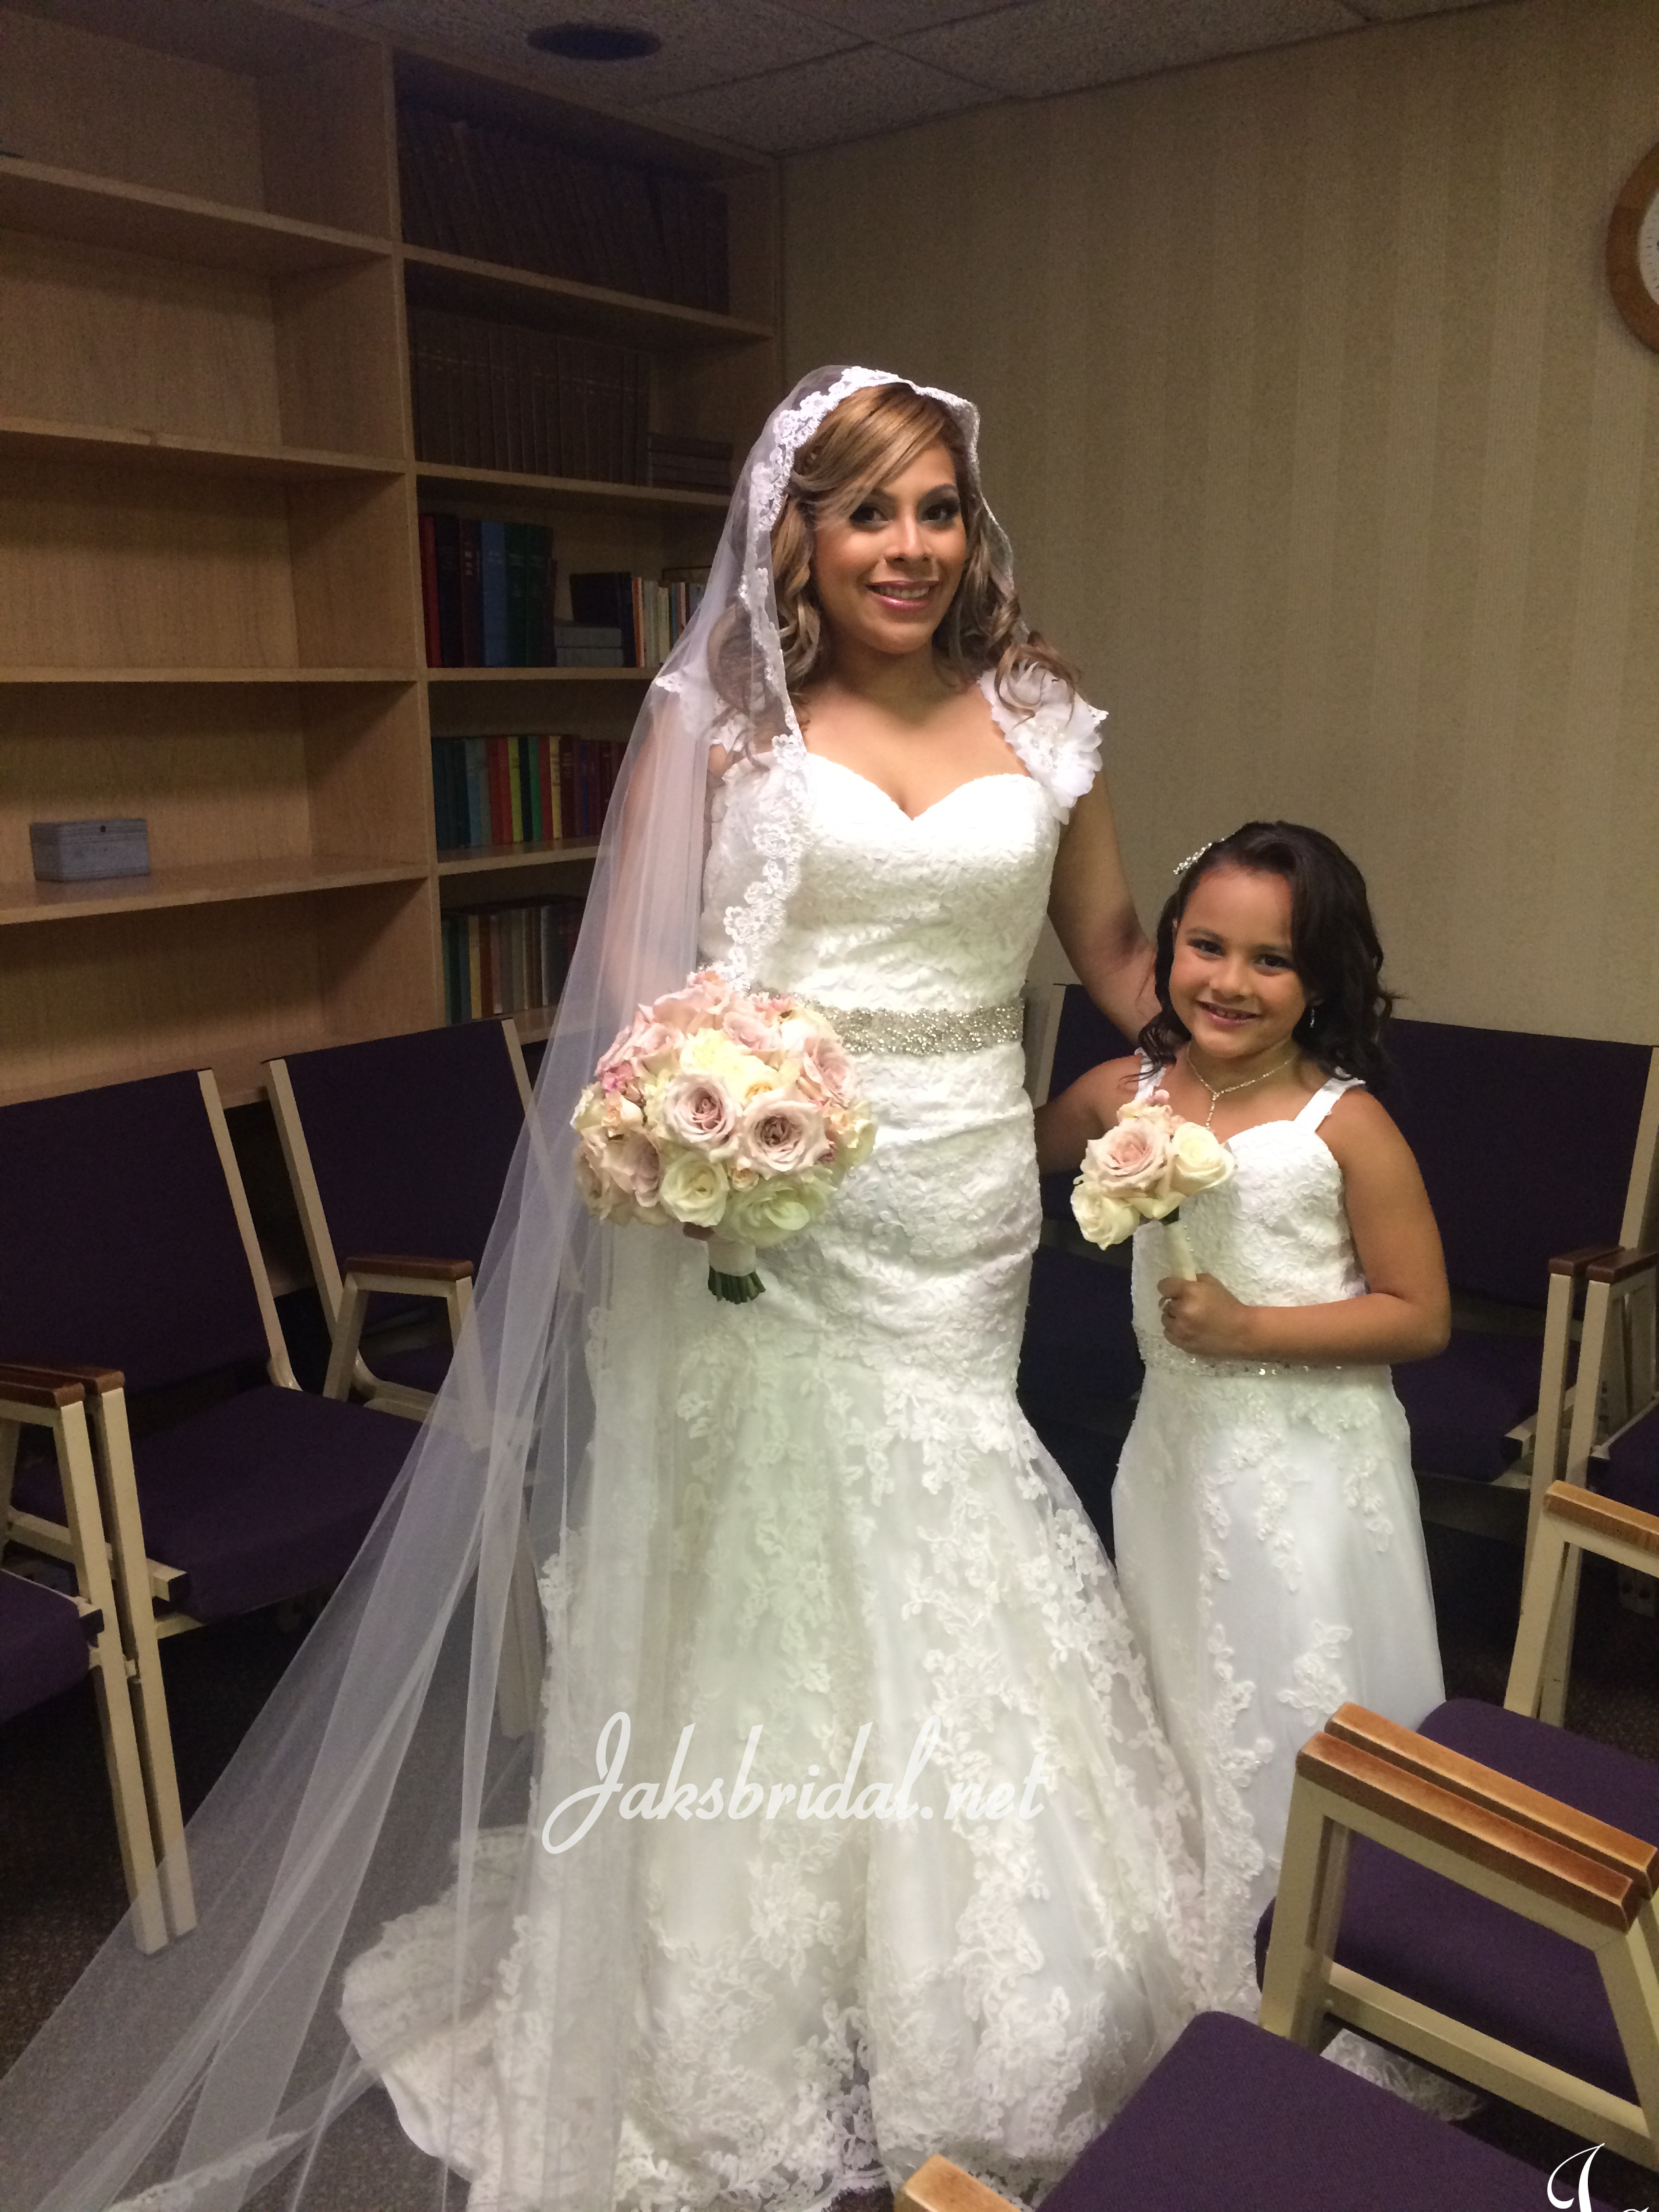 Wedding dresses and matching flower girl dress